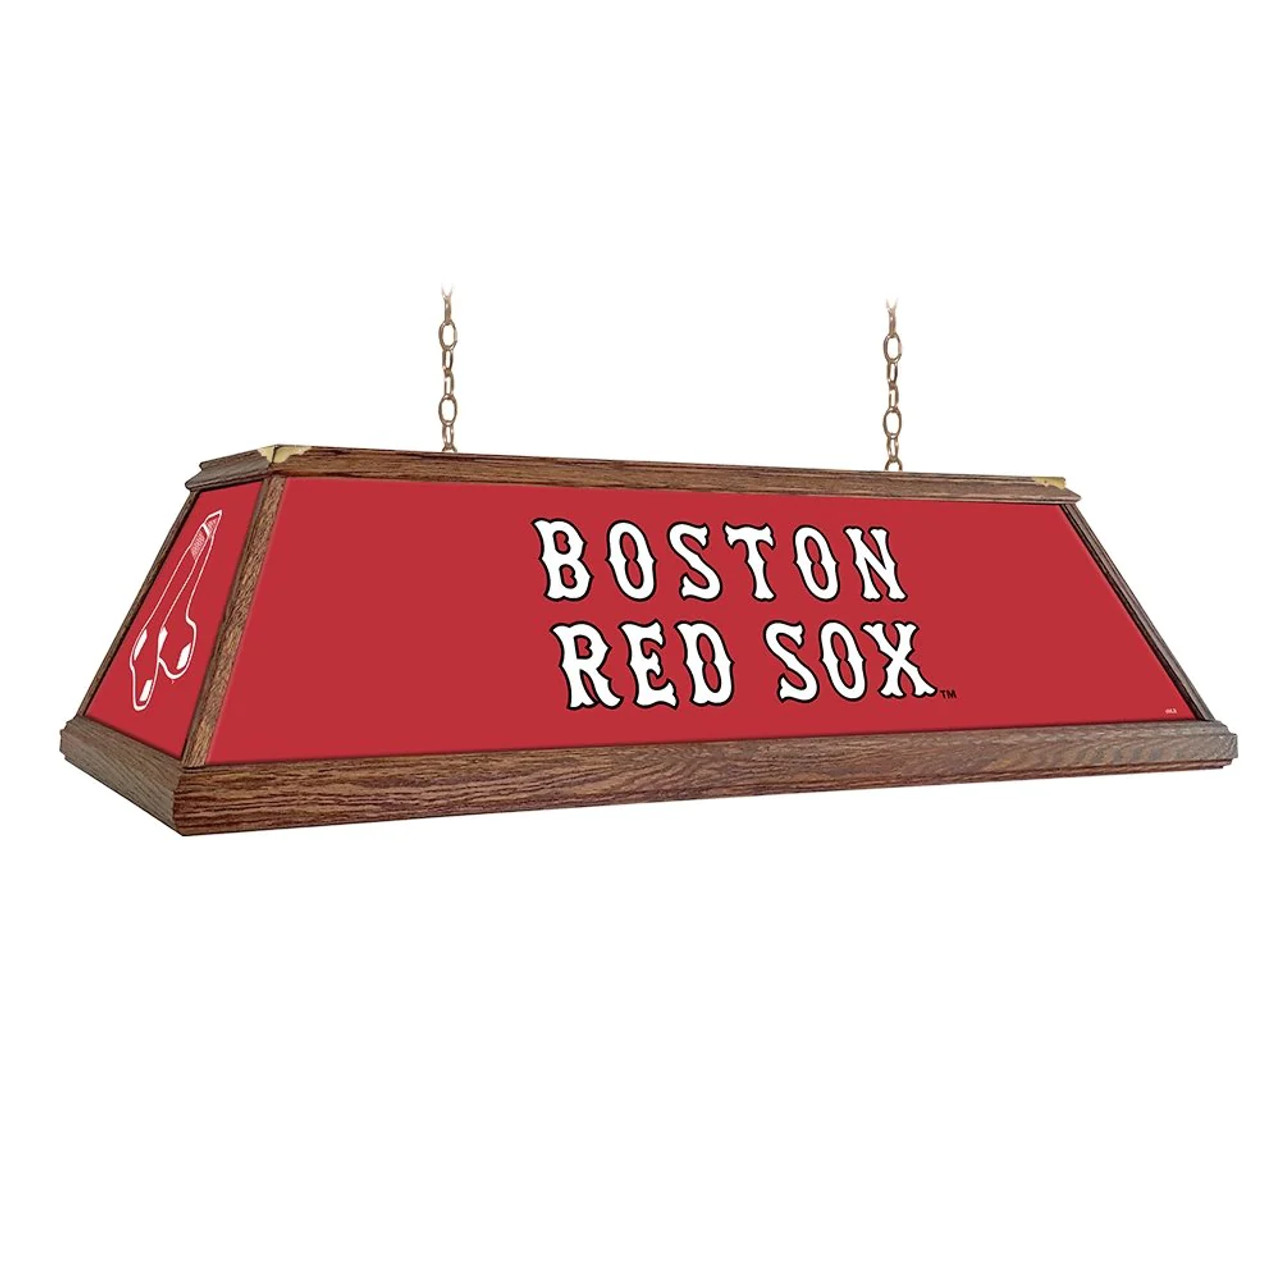 MBSOX-330-01A, Boston, BOS, Sox, Red Sox, BOST, Premium, Wood, Billiard, Pool, Table, Light, Lamp, MLB, The Fan-Brand, "A" Version, 704384965534